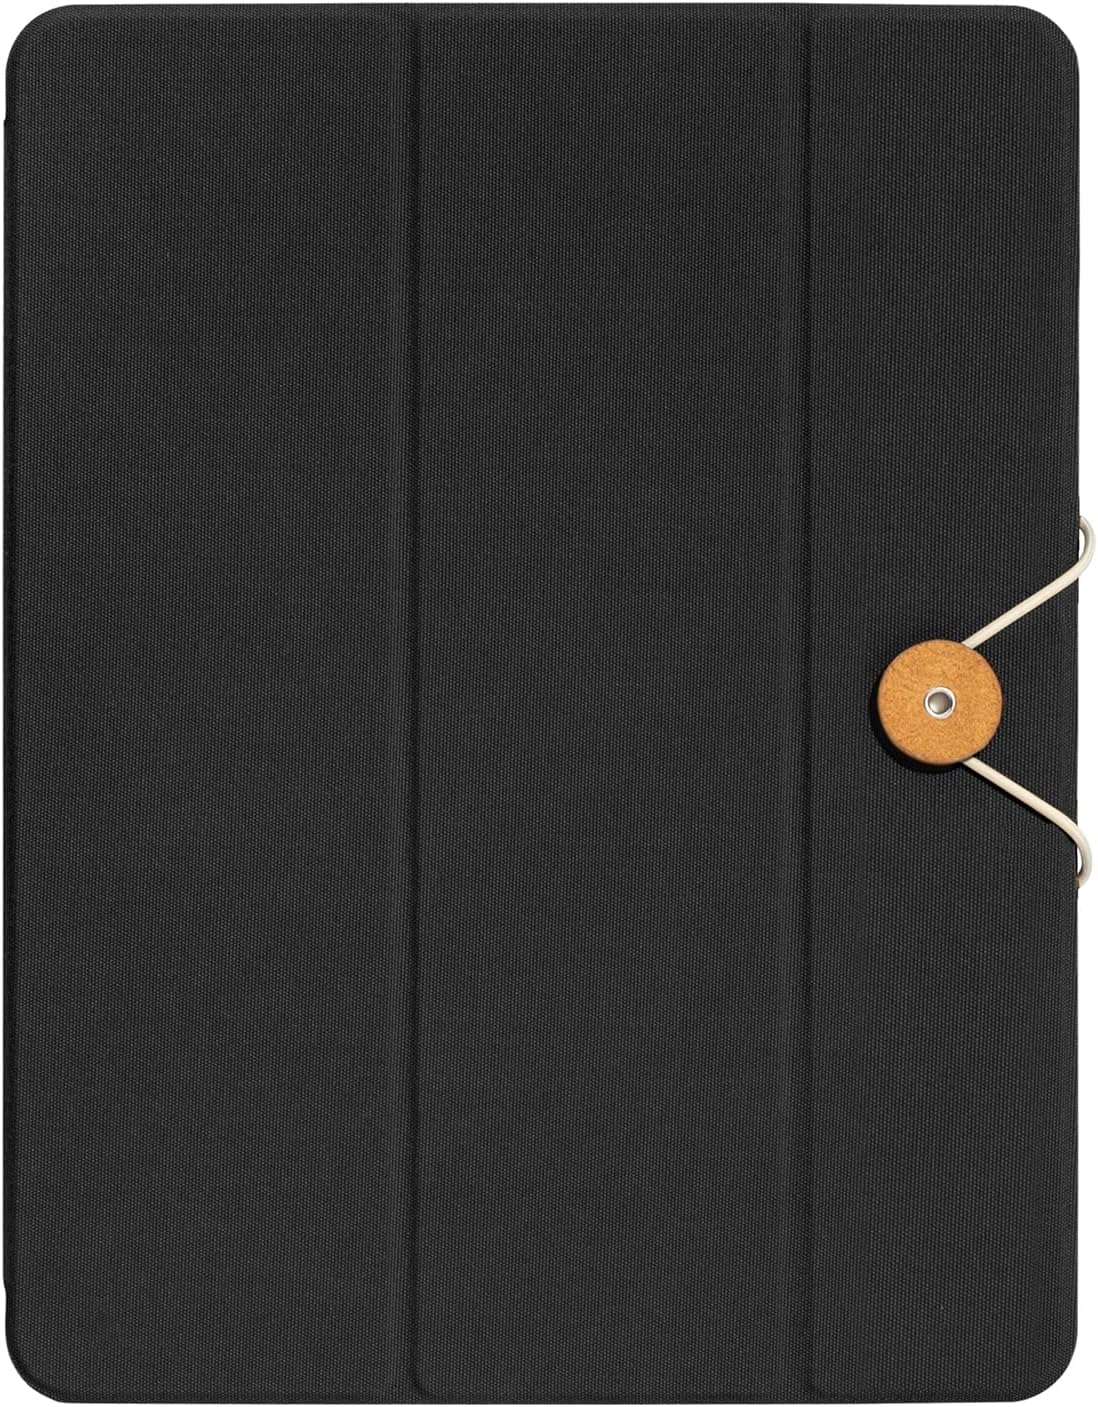 Native U Folio iPad 12.9inch - Black